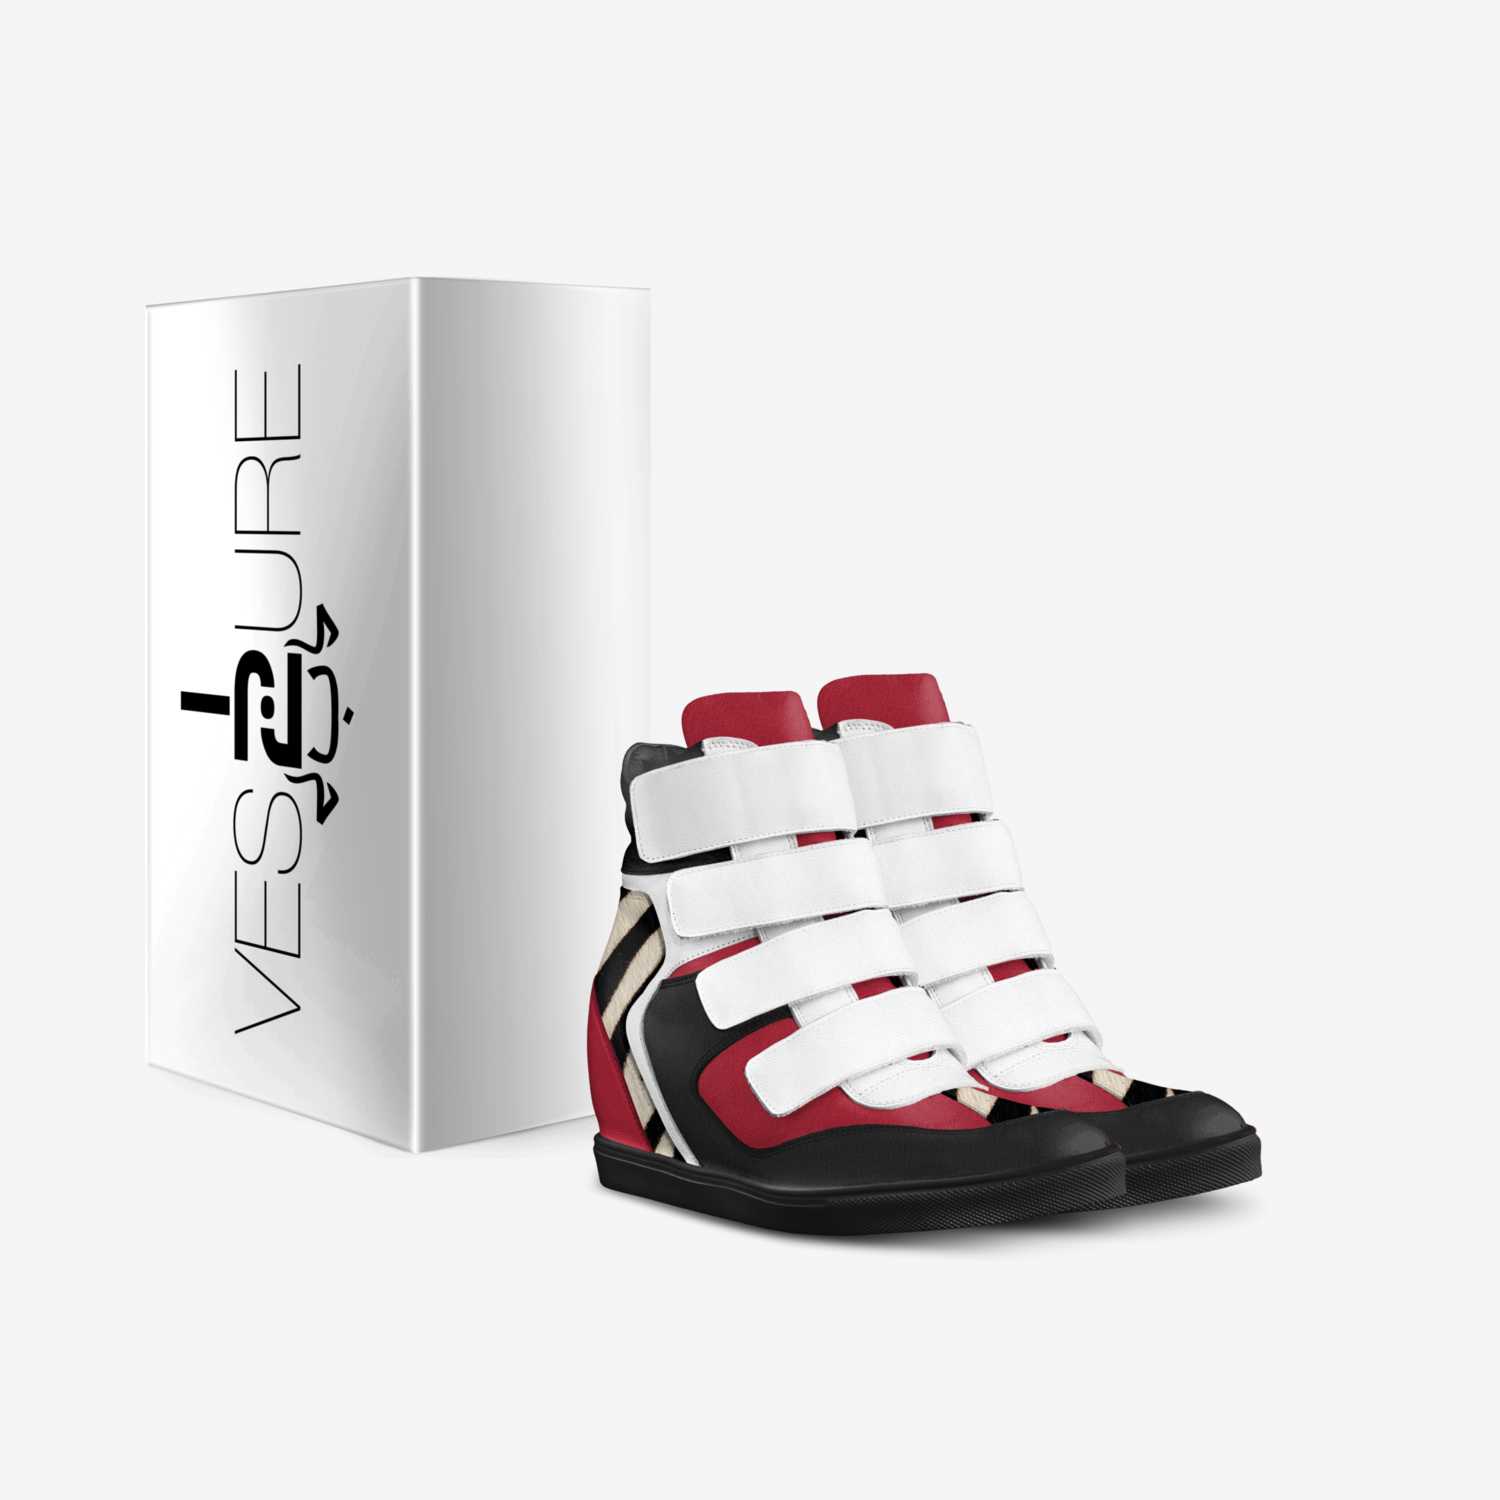 Ves2ure 12 custom made in Italy shoes by Jordan Warren Jr | Box view